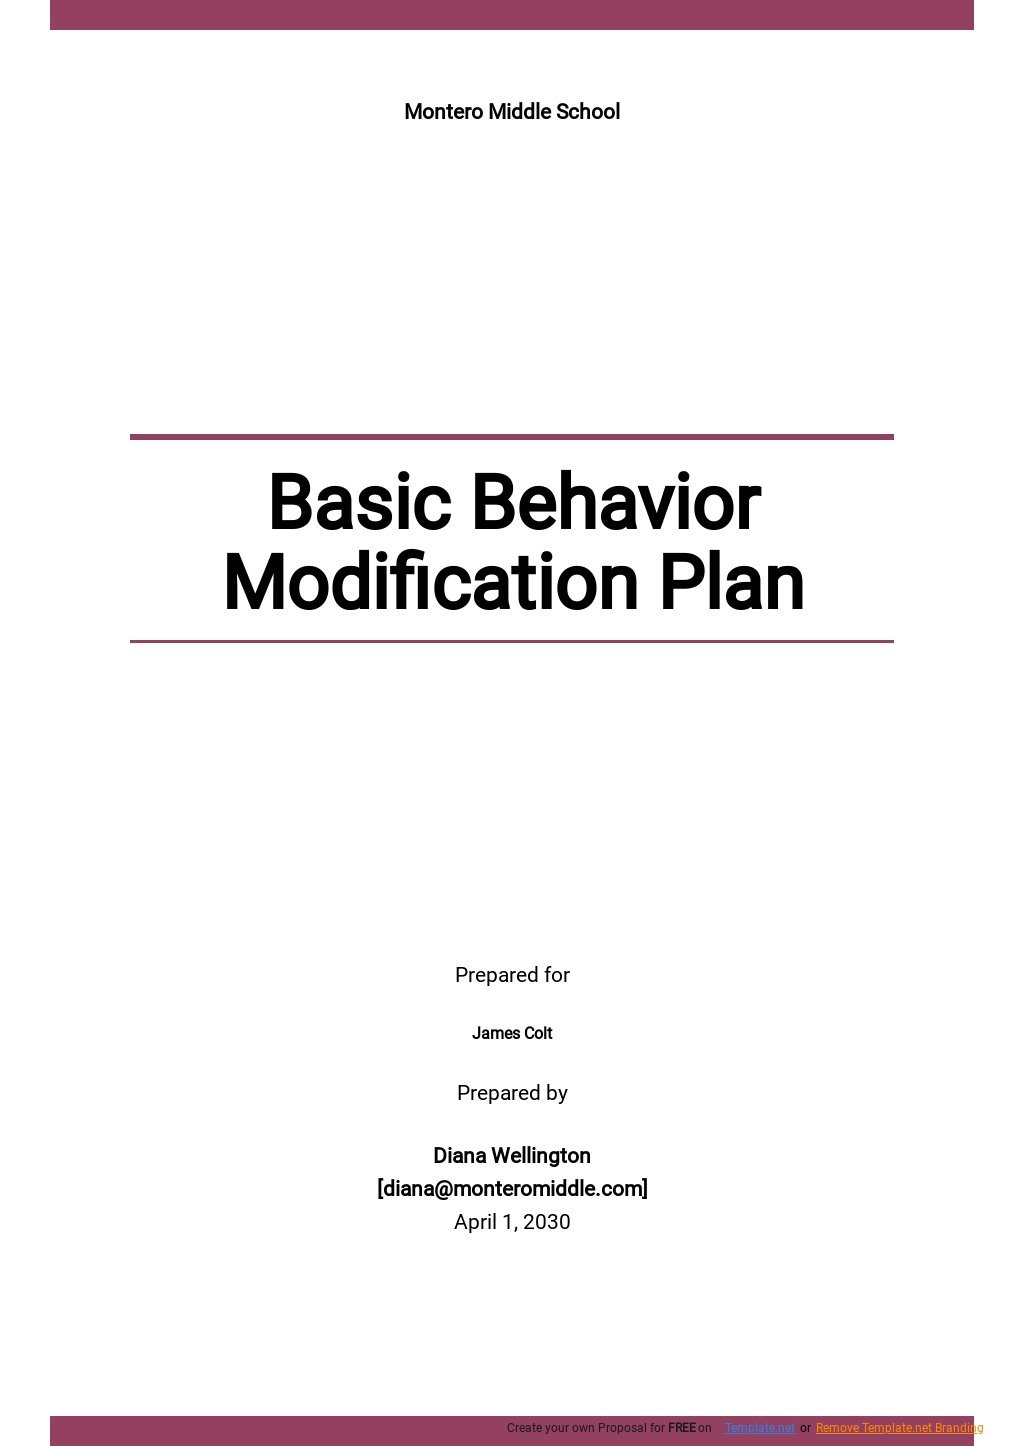 Free Basic Behavior Modification Plan Template